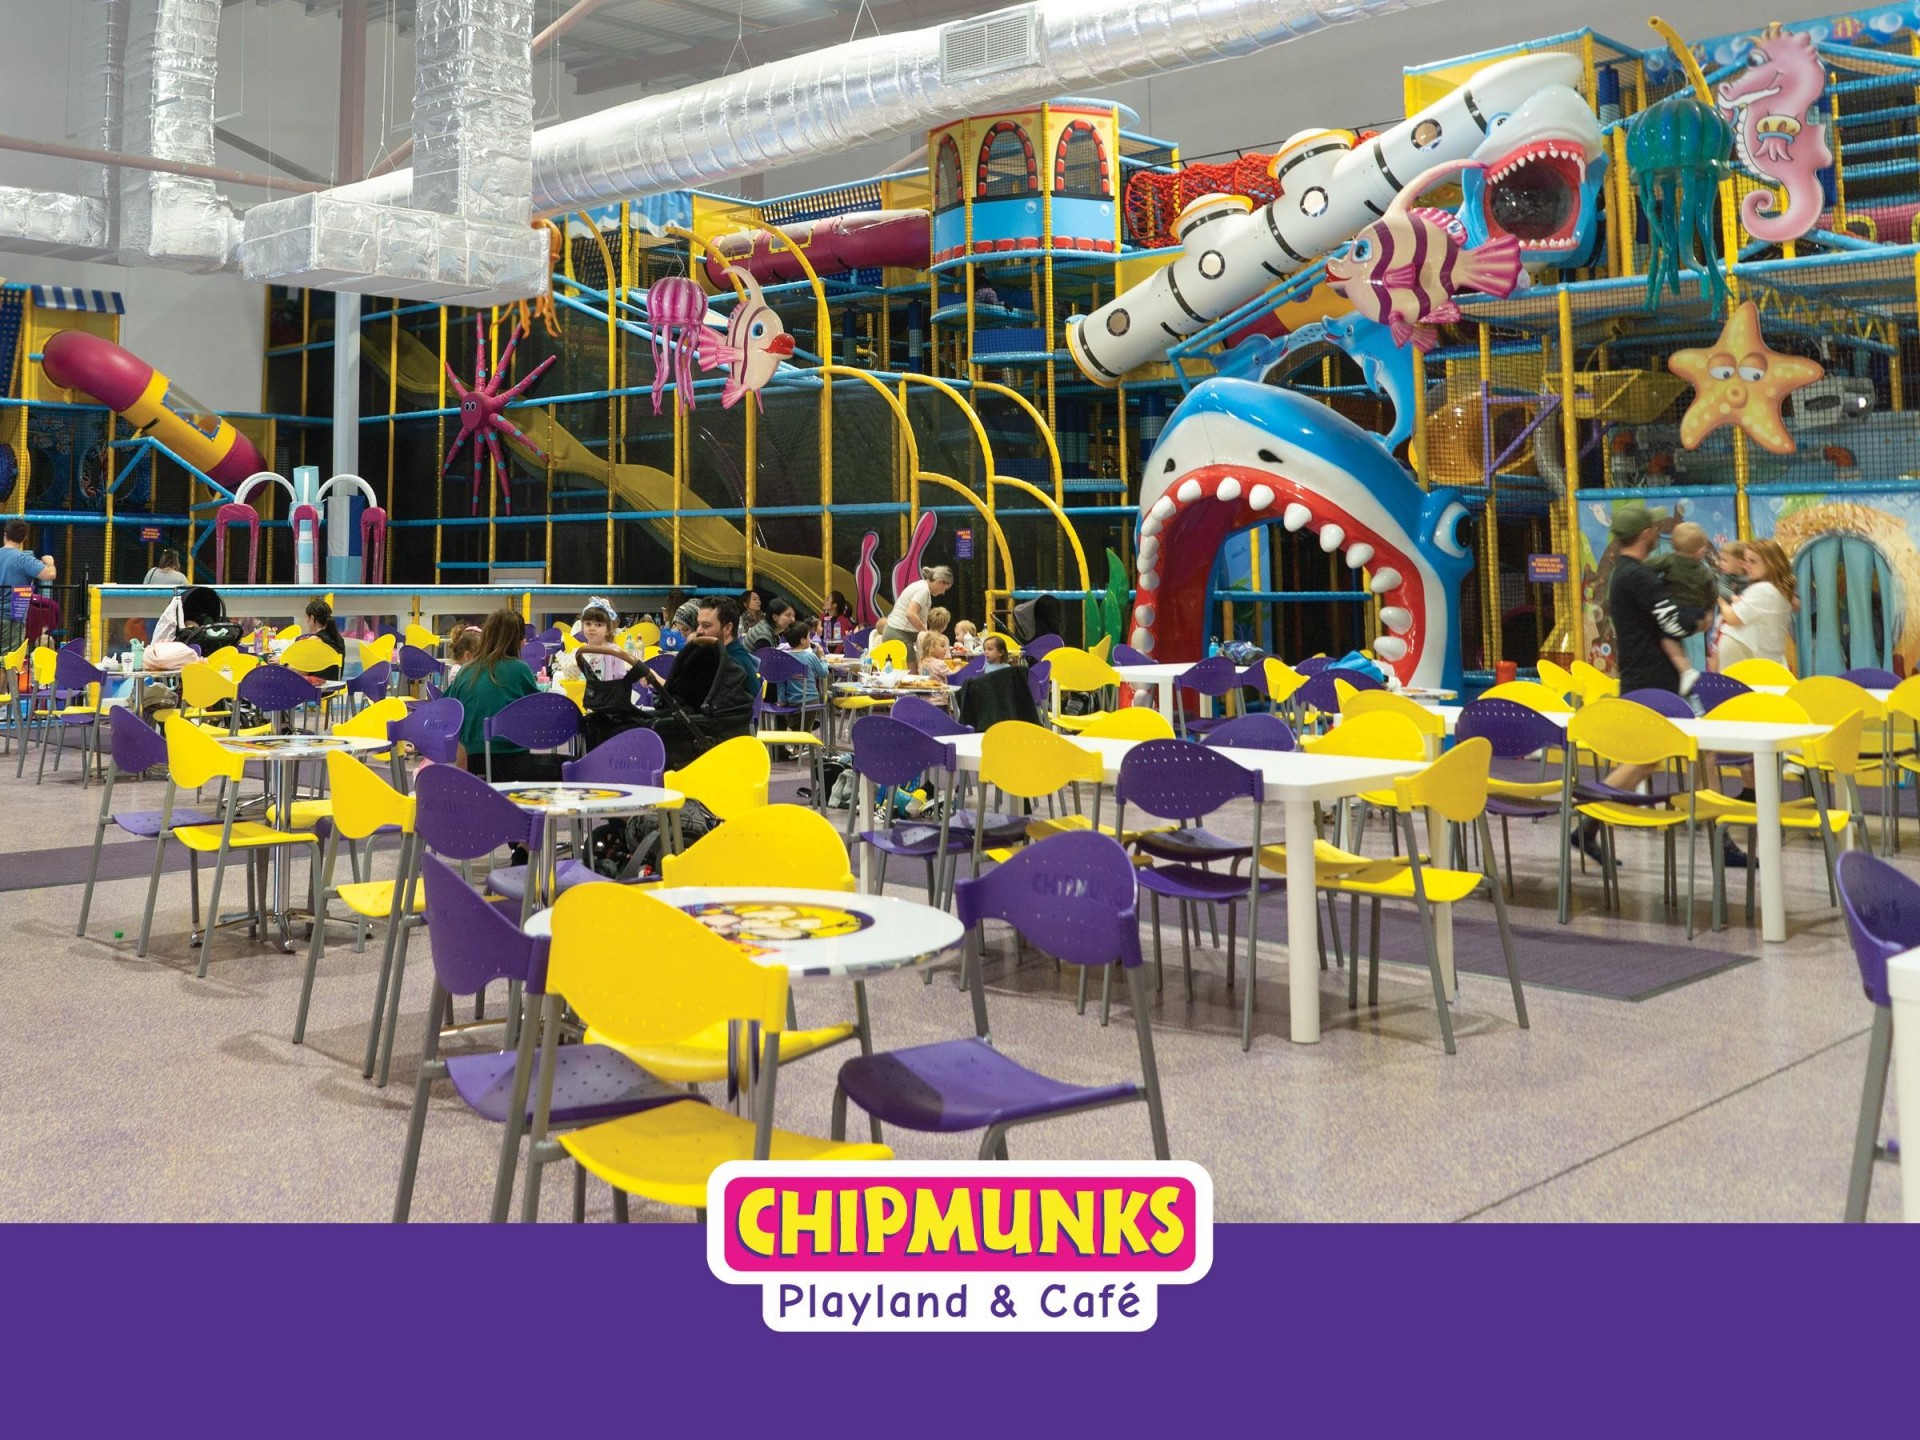 Chipmunks indoor playground franchise for sale - Joondalup